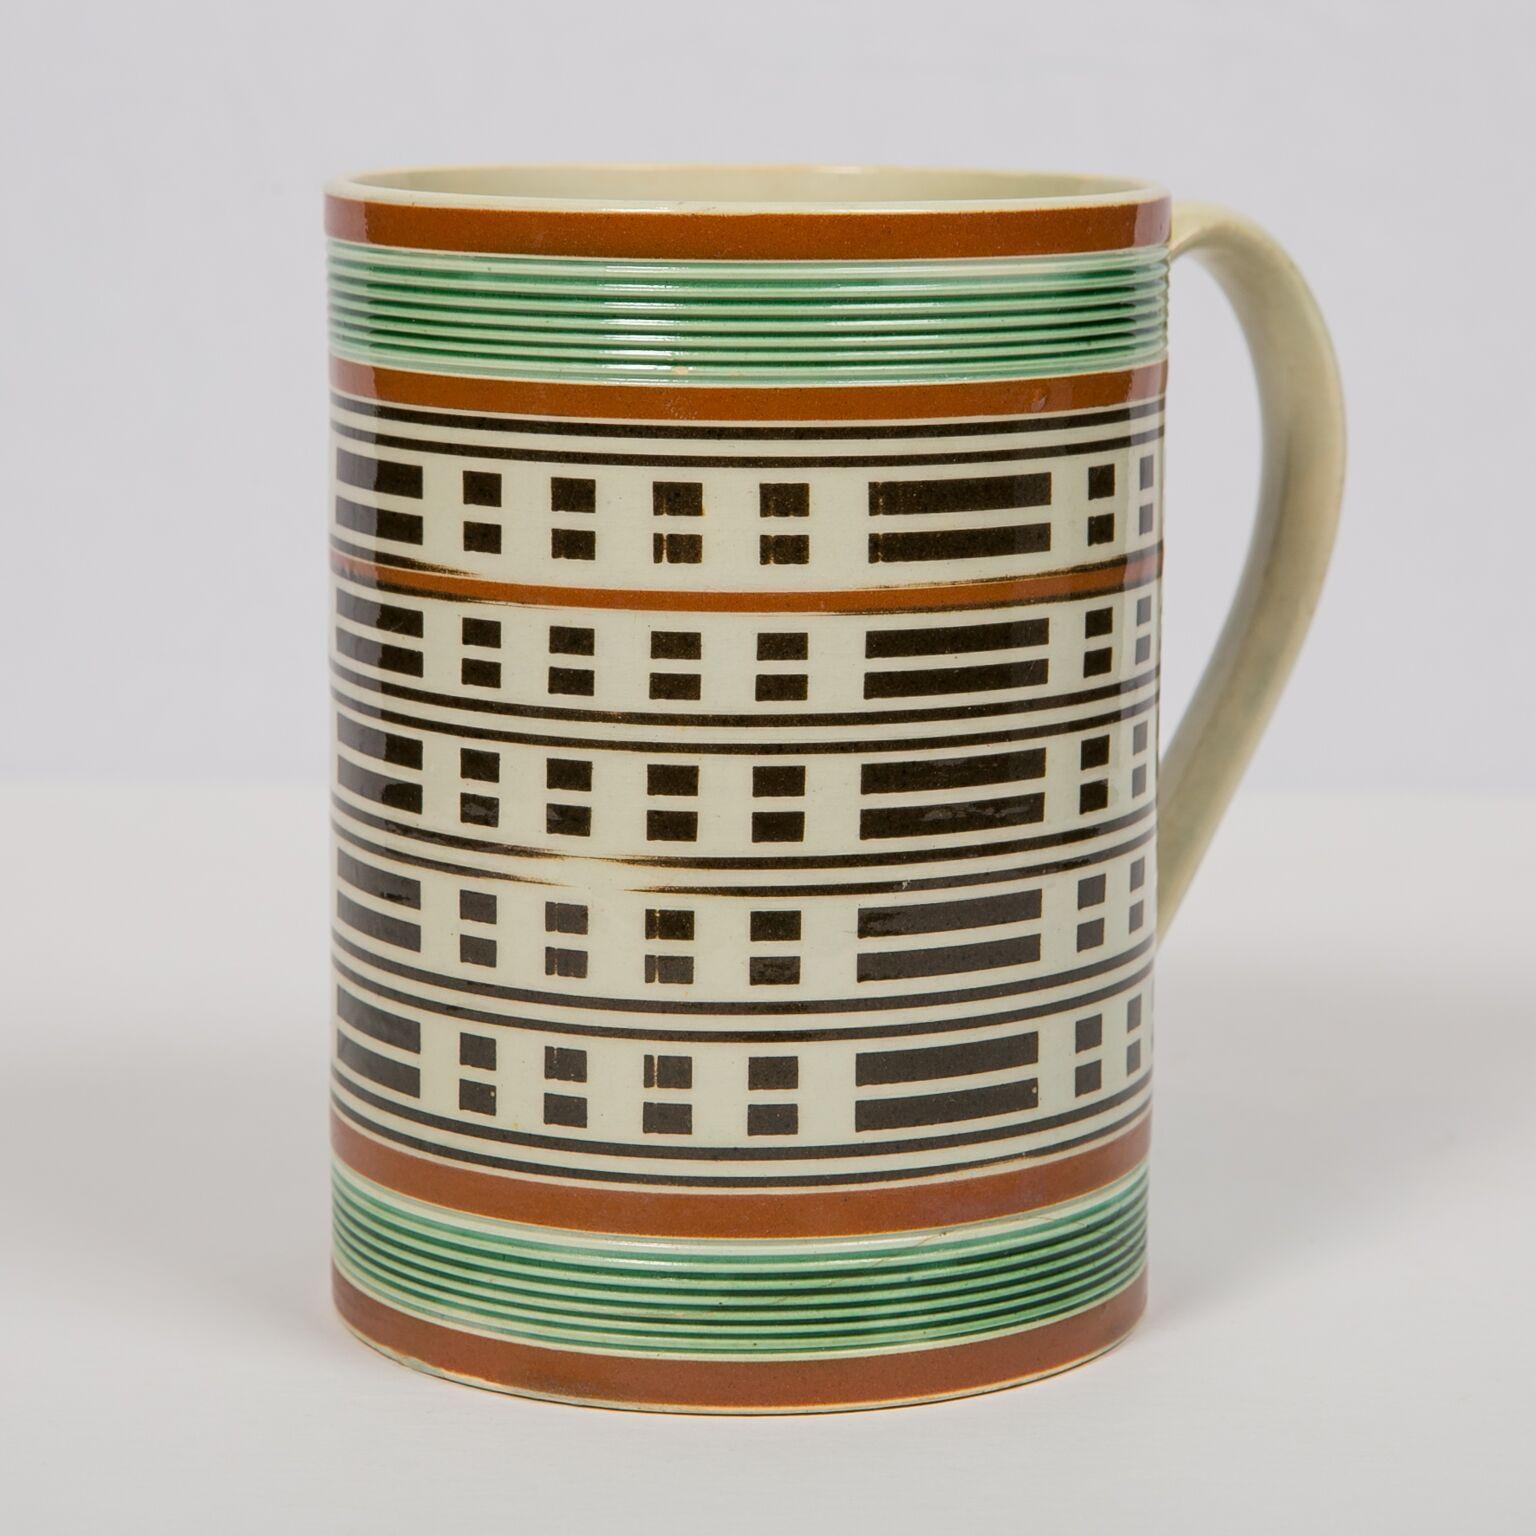 Antique Mochaware Mug Slip Decorated Made in England, circa 1815 1